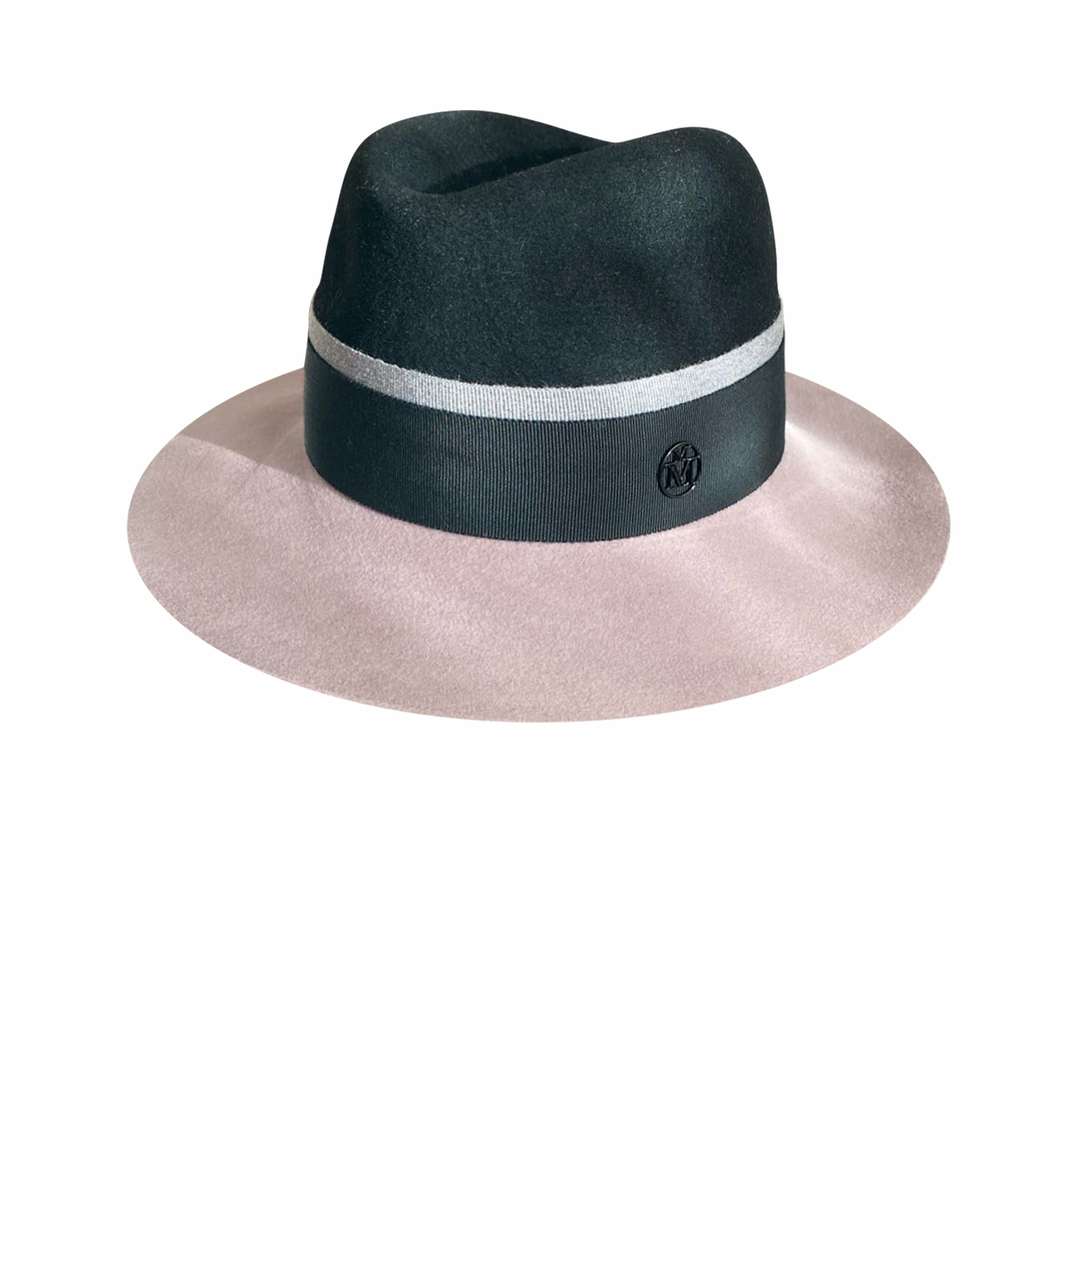 MAISON MICHEL Фиолетовая шерстяная шляпа, фото 1